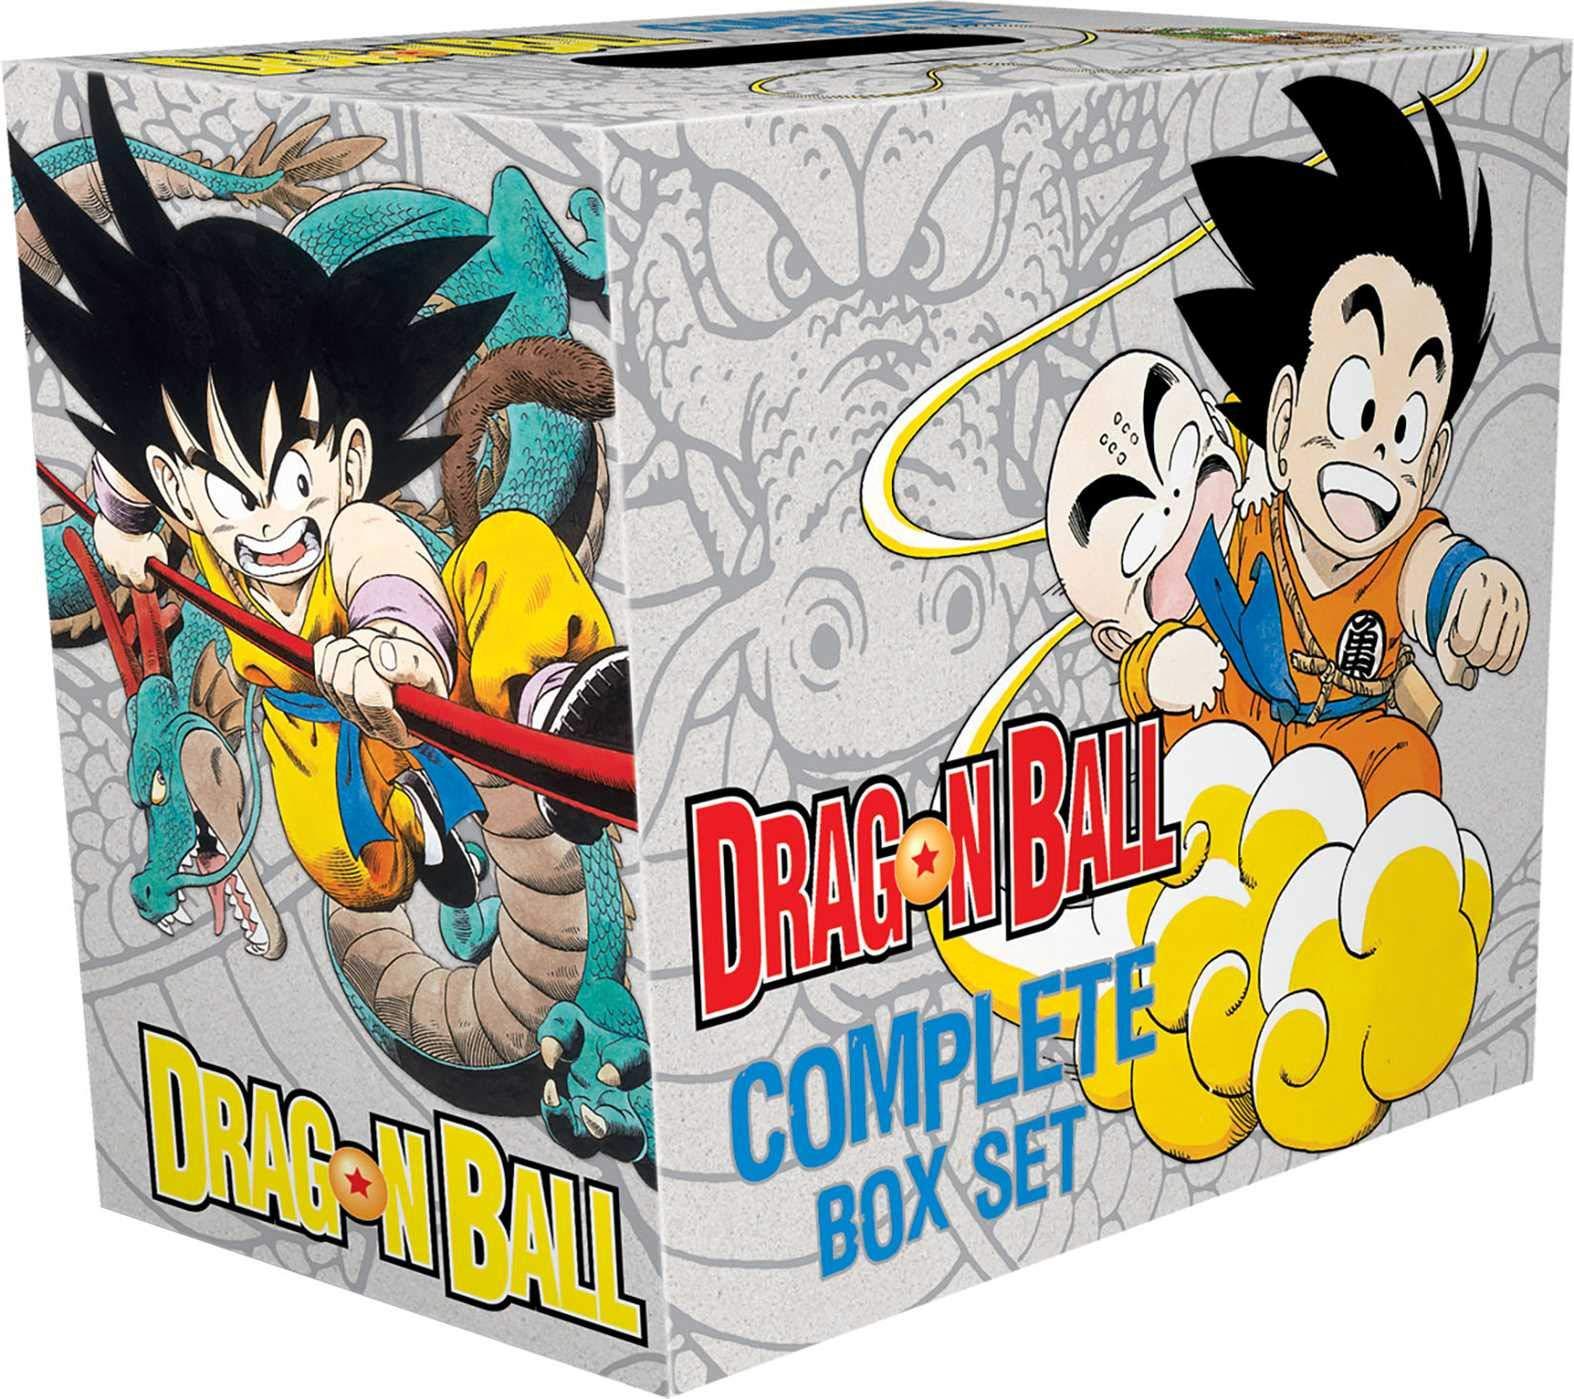 Dragon Ball Complete Box Set Volumes 1-16 Paperback Manga Books for $77.87 Shipped